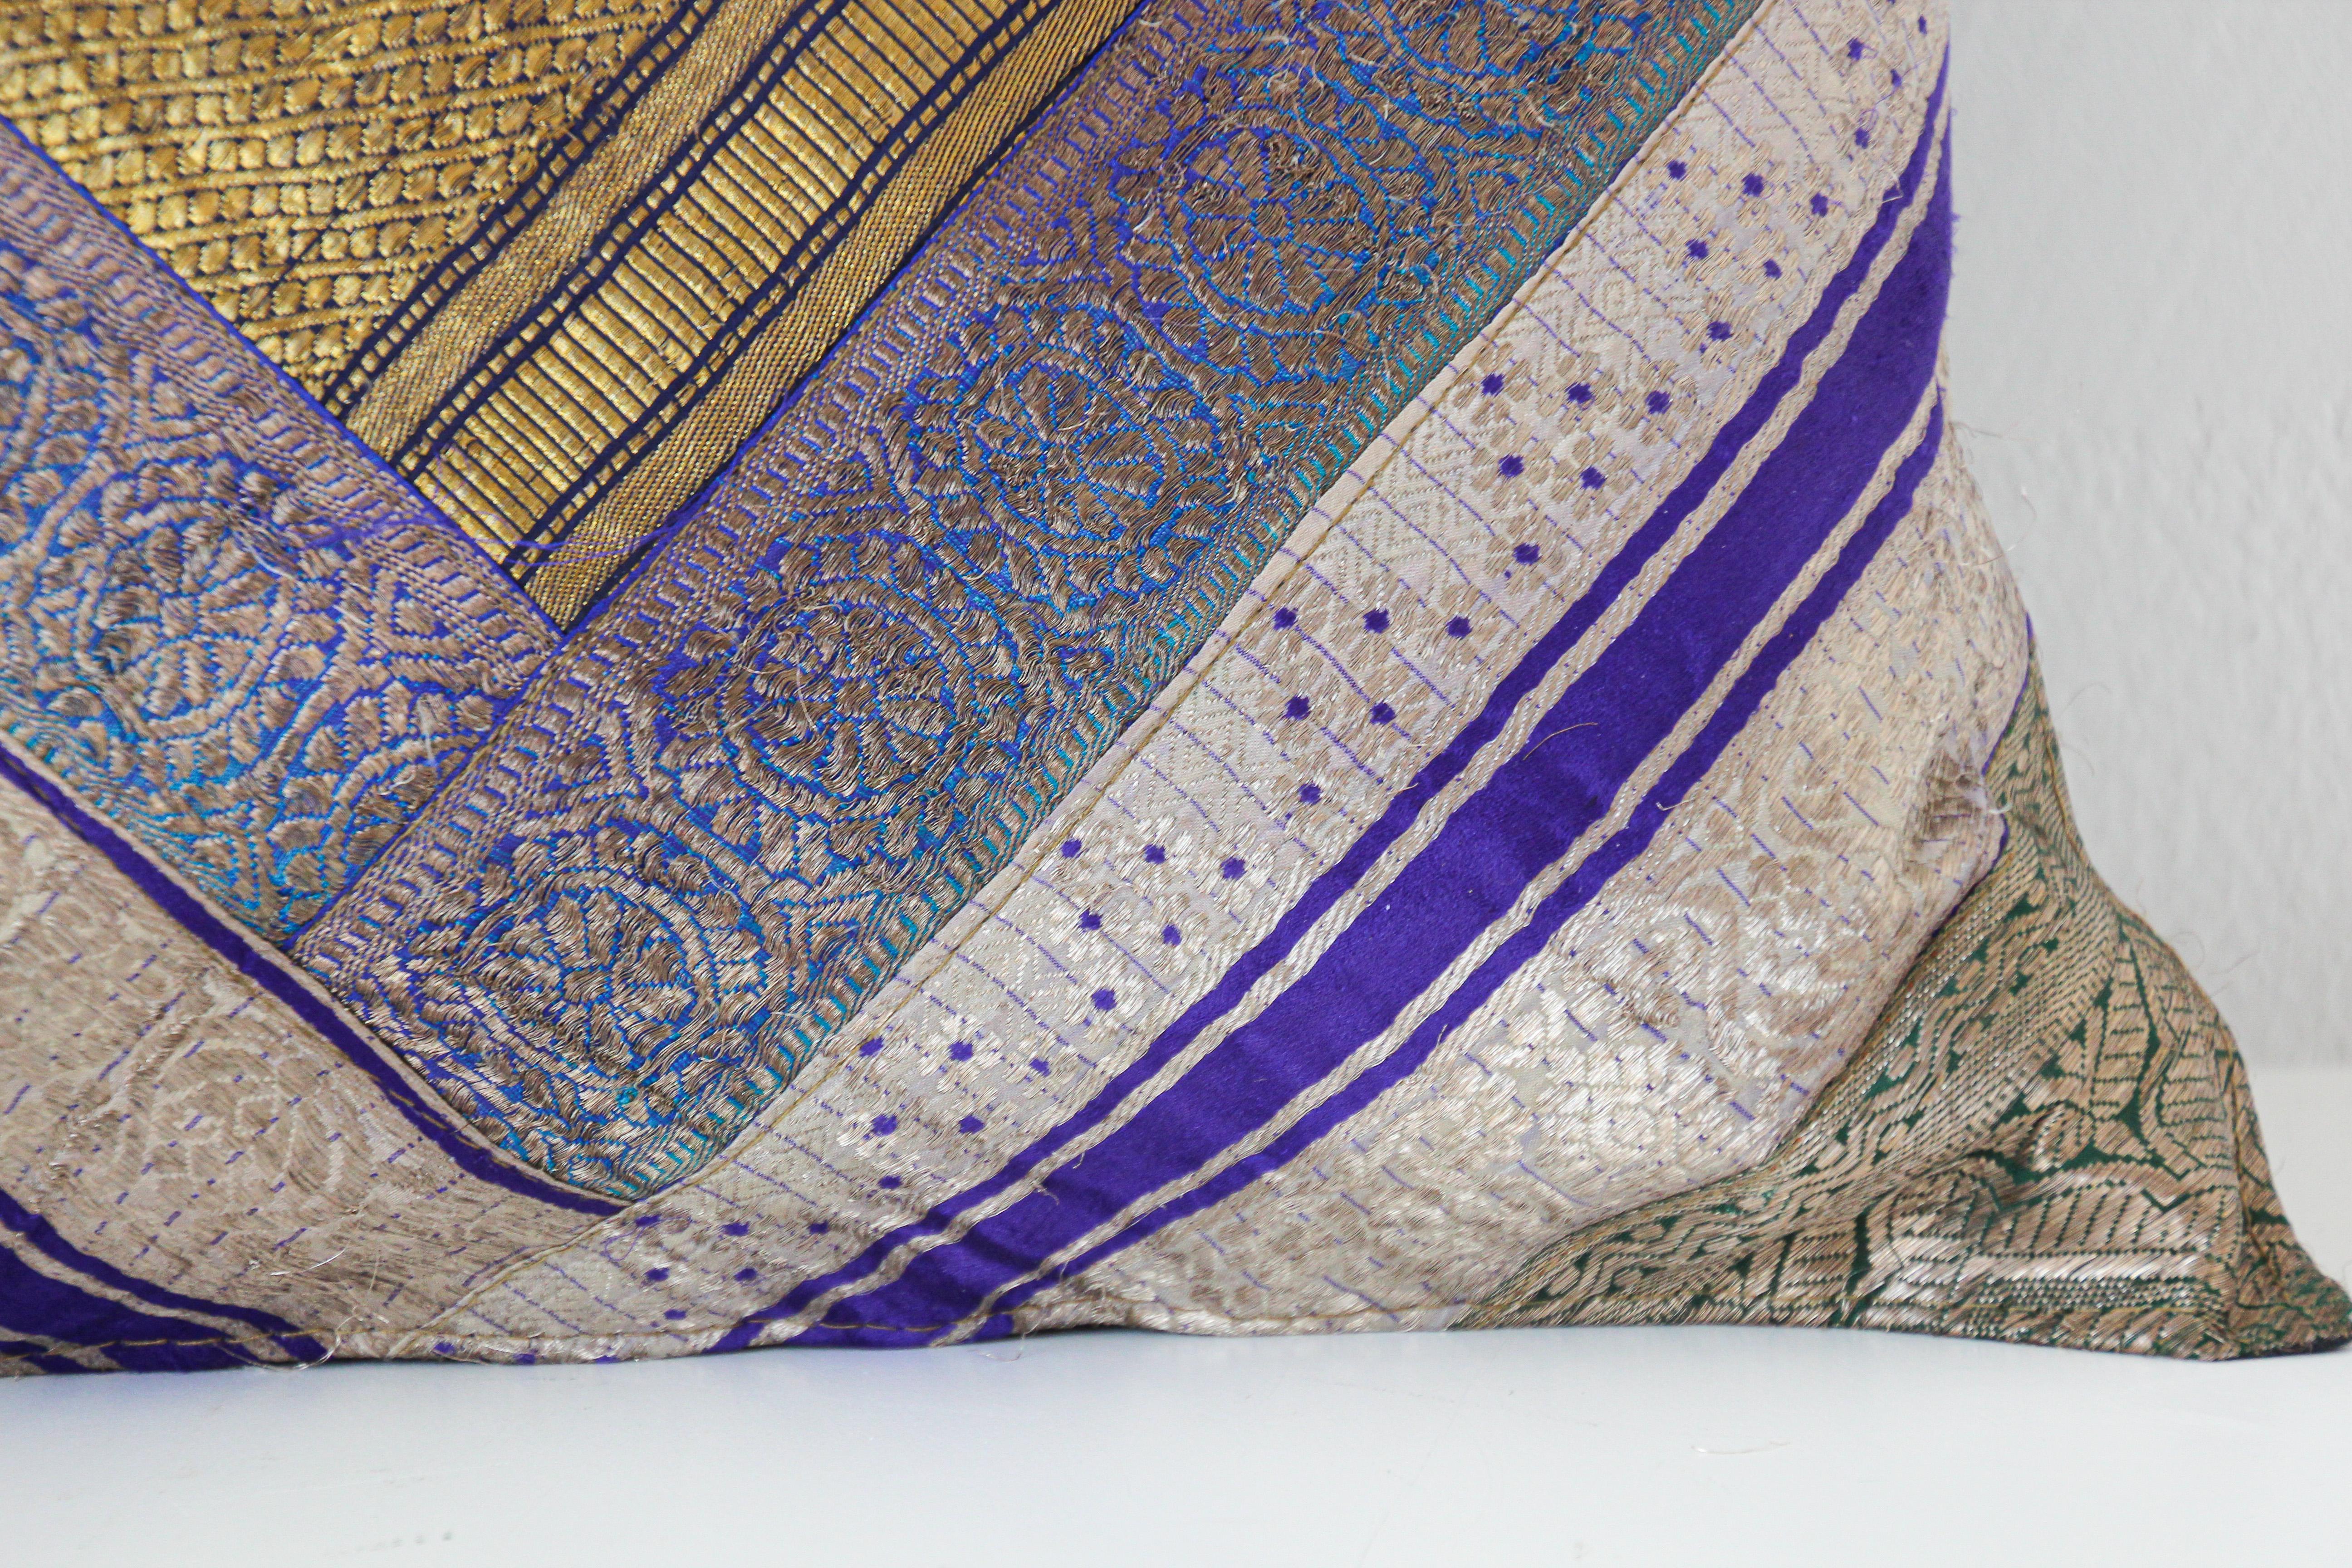 Beaded Decorative Silk Throw Pillow Made from Vintage Sari Borders, India